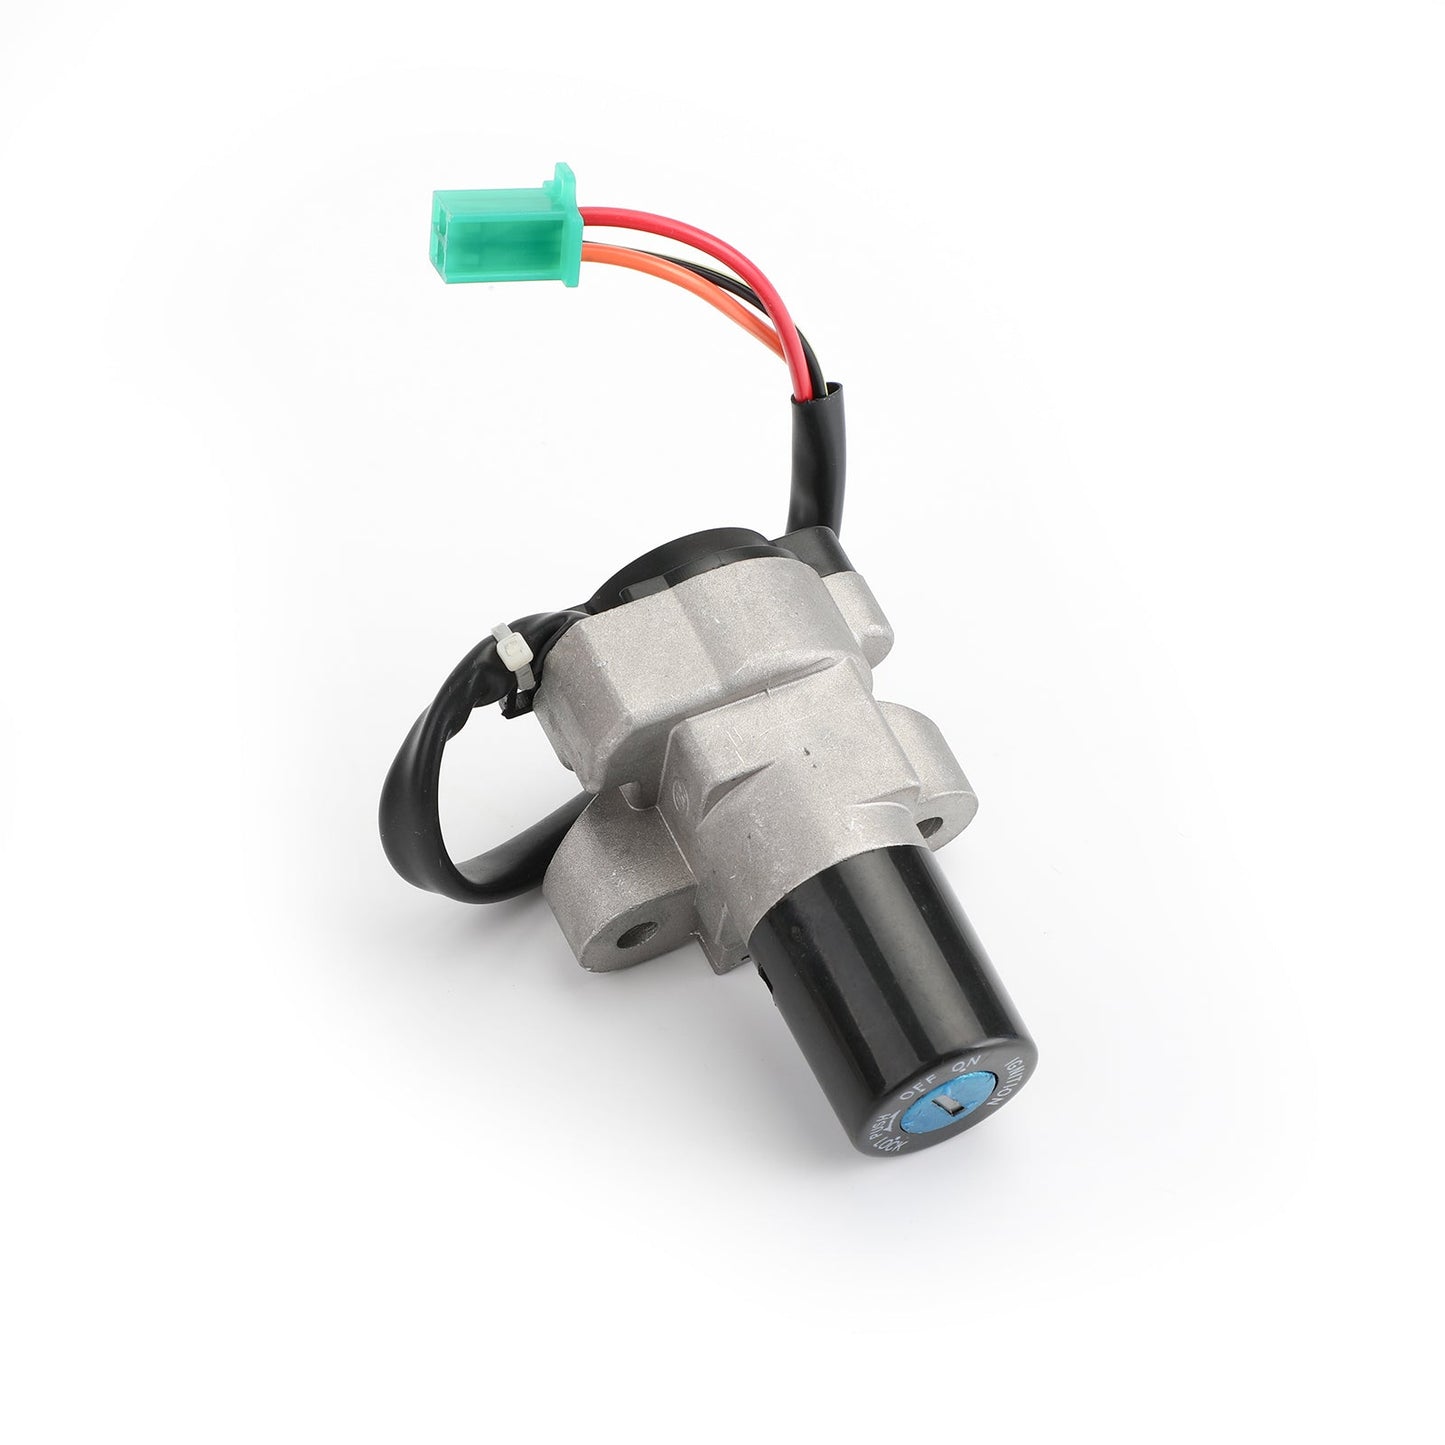 Ignition Switch Fuel Gas Cap Seat Lock Keys Kit Fit For Suzuki GW250 Inazuma 14-17 GSXR250 13-17 37101-48860